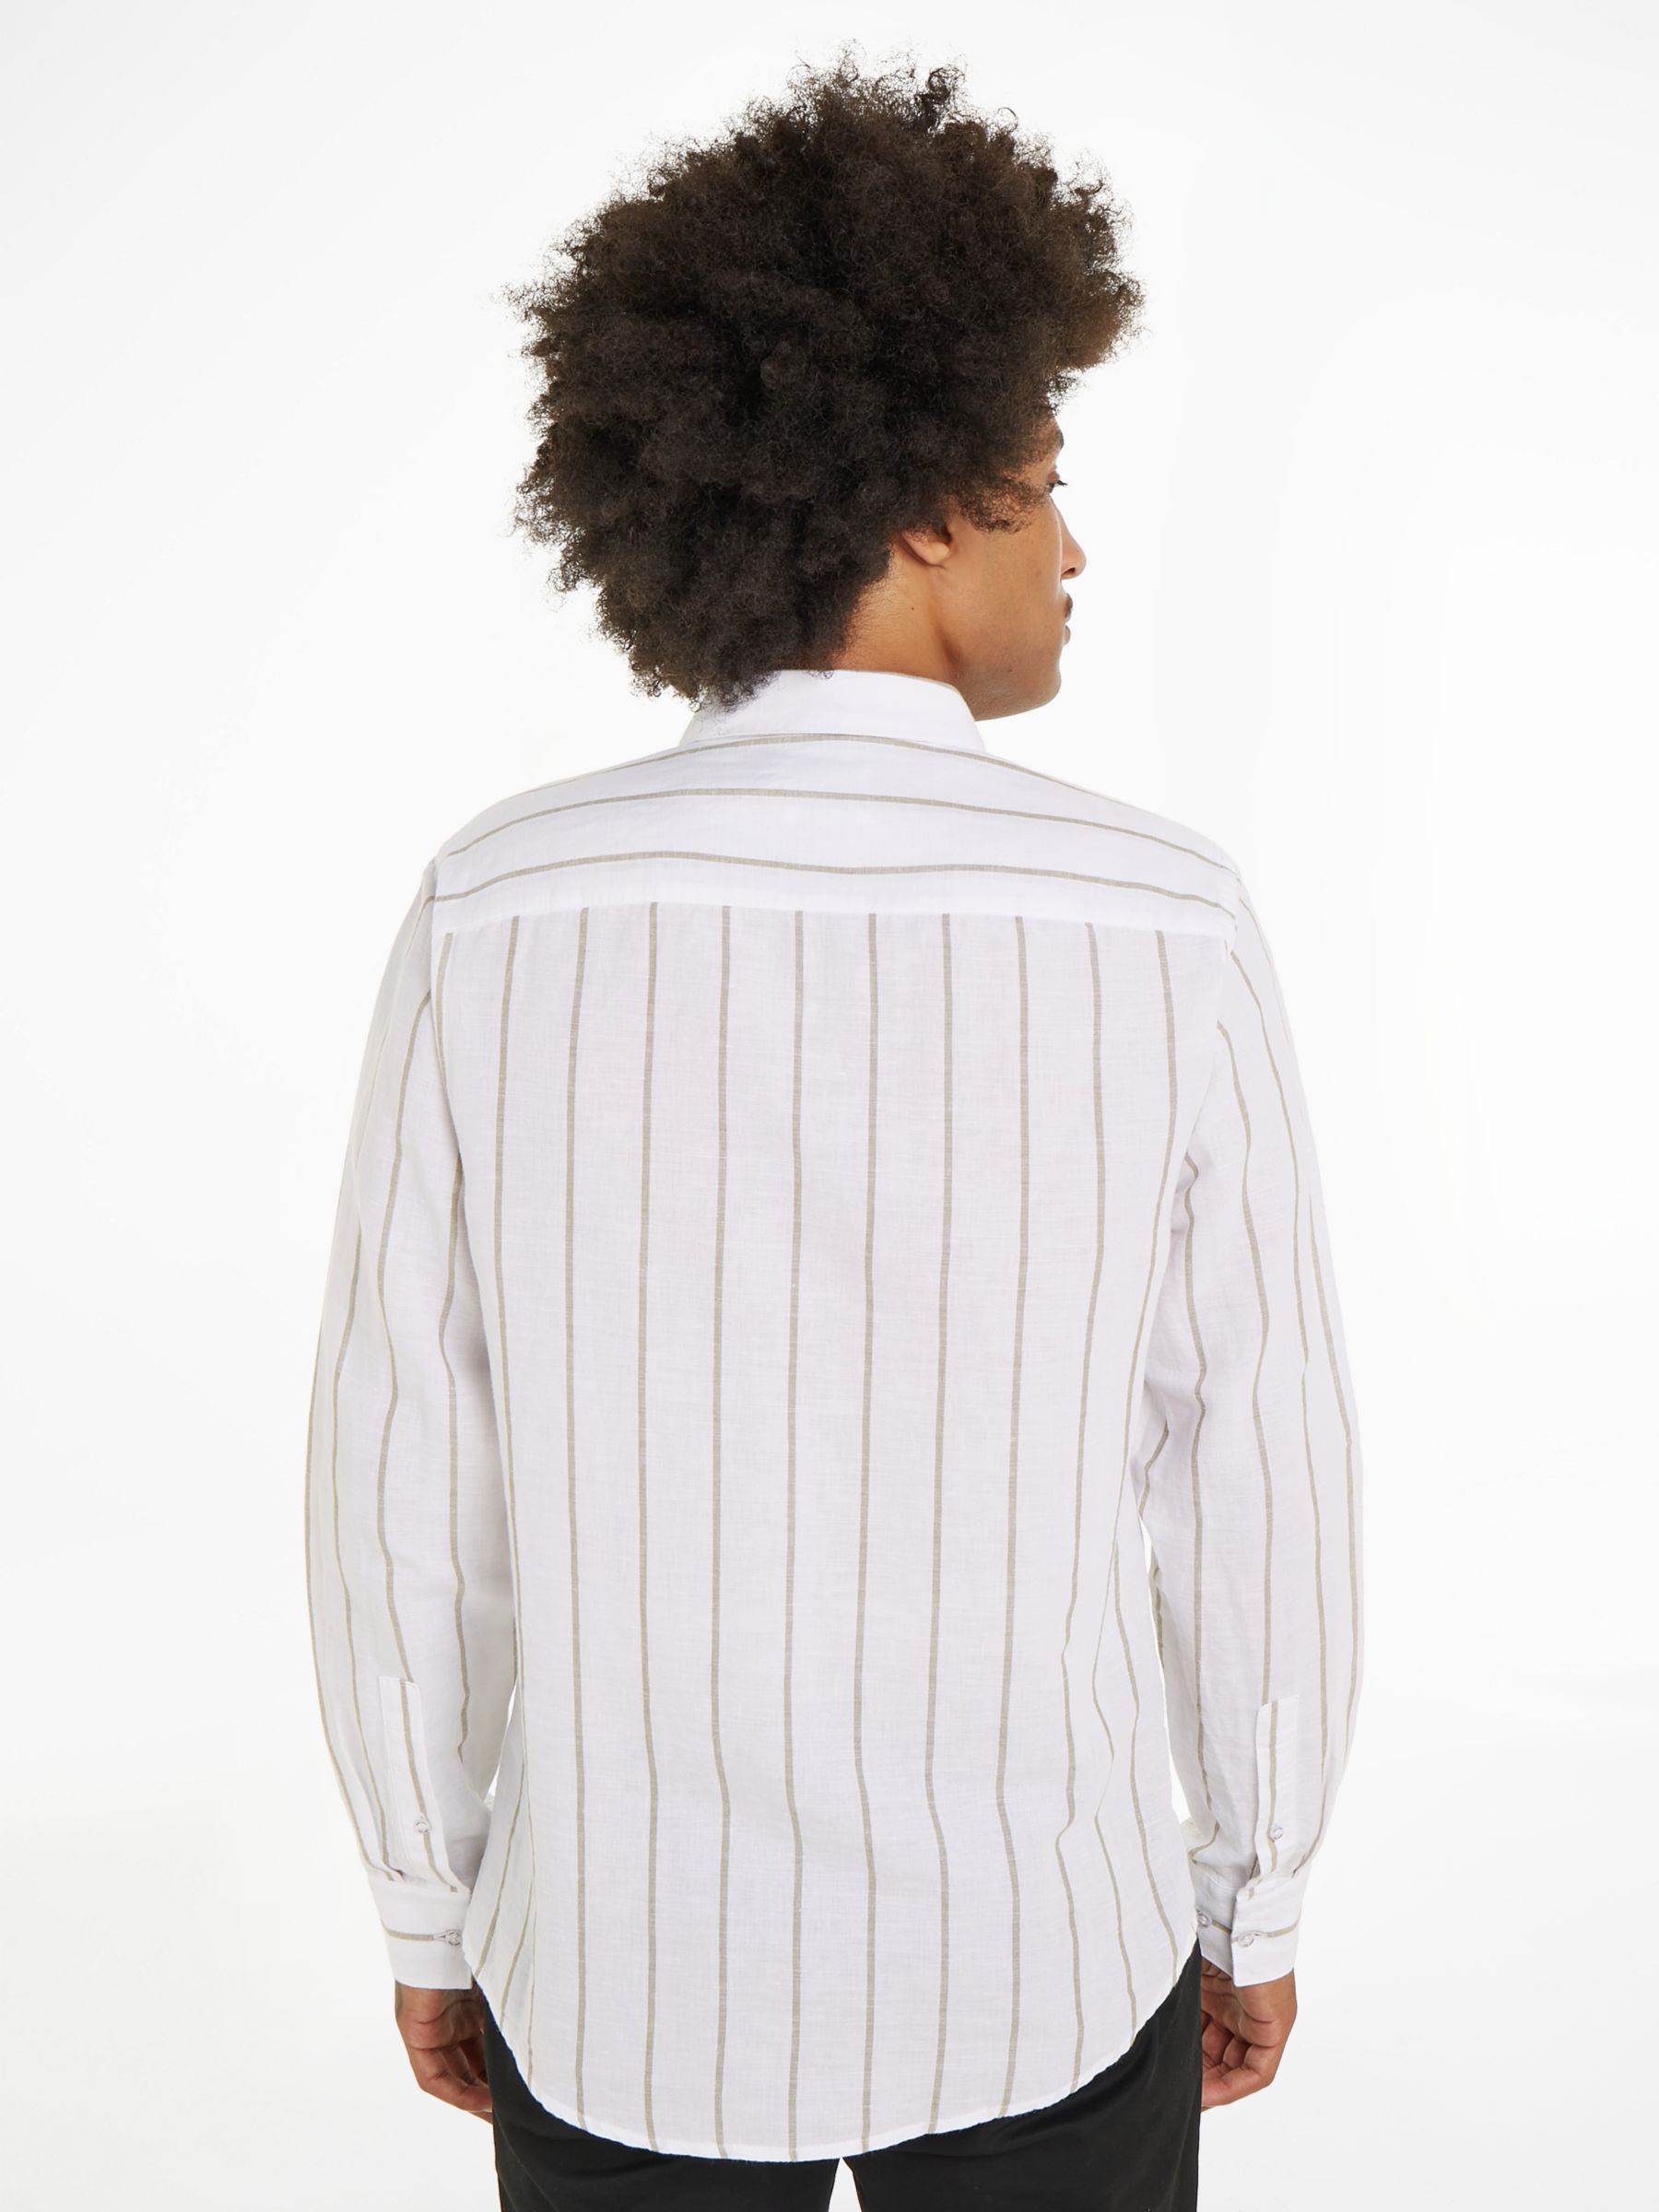 Buy Calvin Klein Linen Blend Stripe Shirt, White/Delta Green Online at johnlewis.com